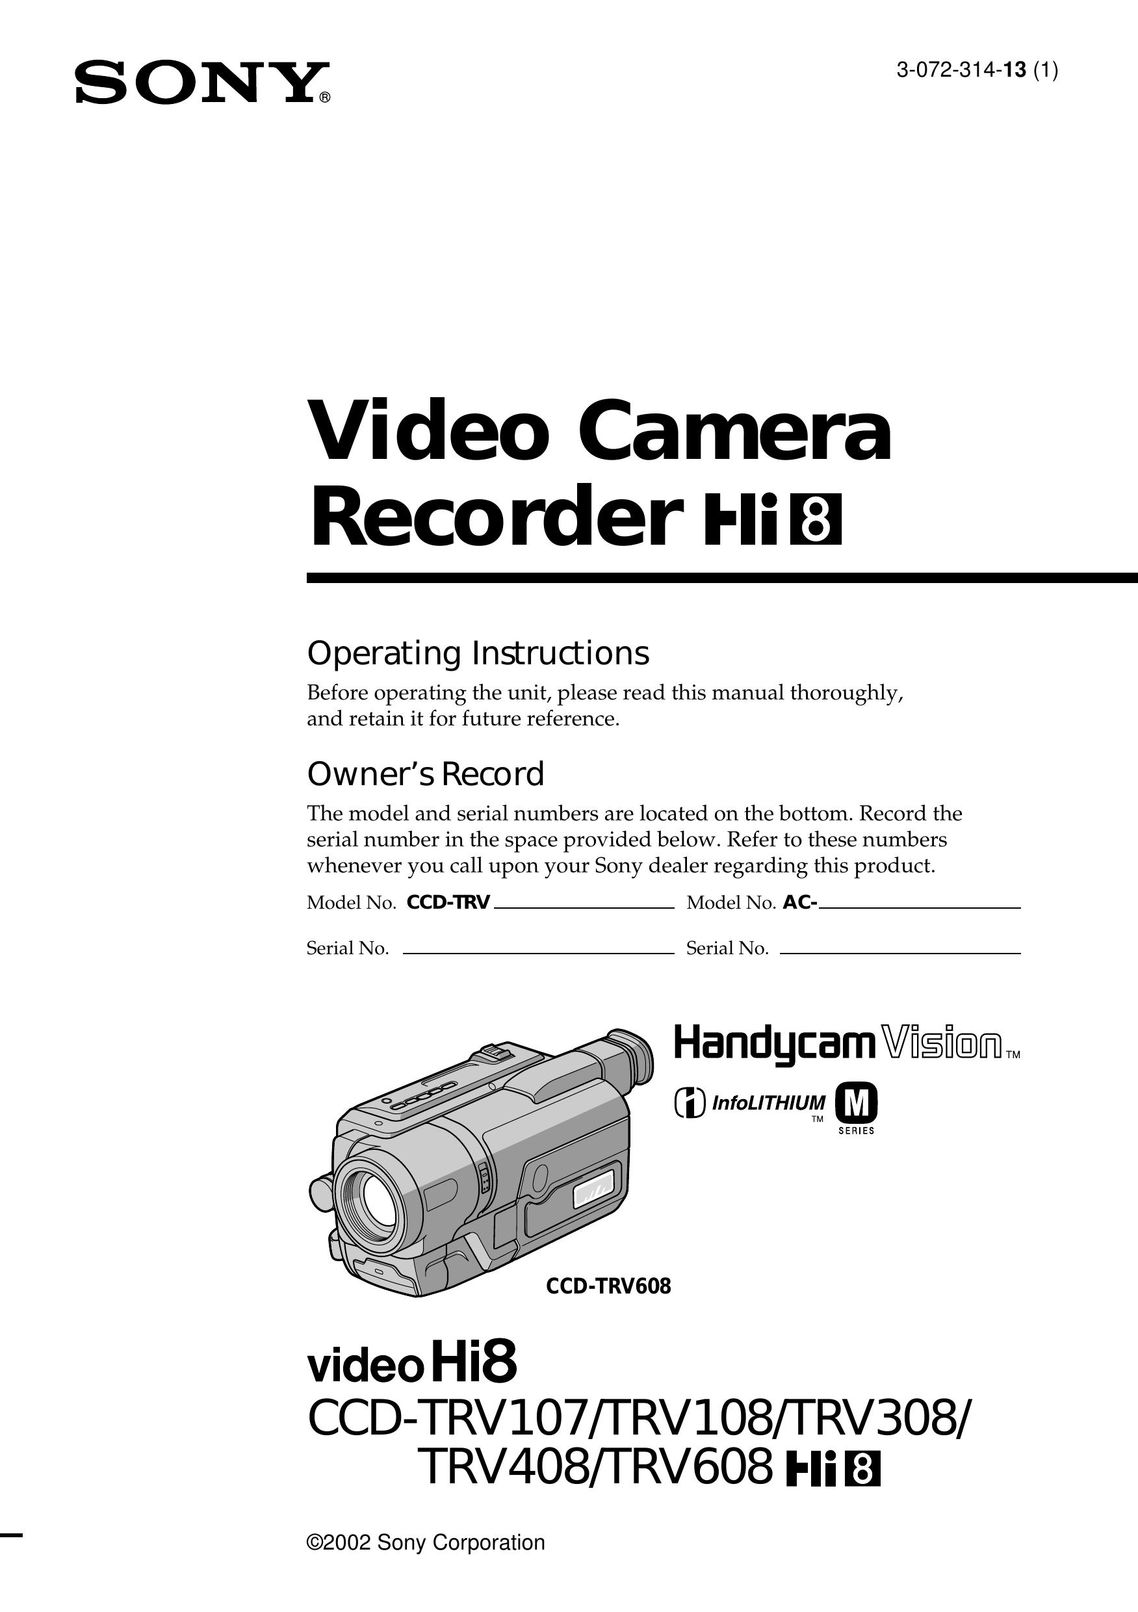 Sony CCD-TRV107 VCR User Manual